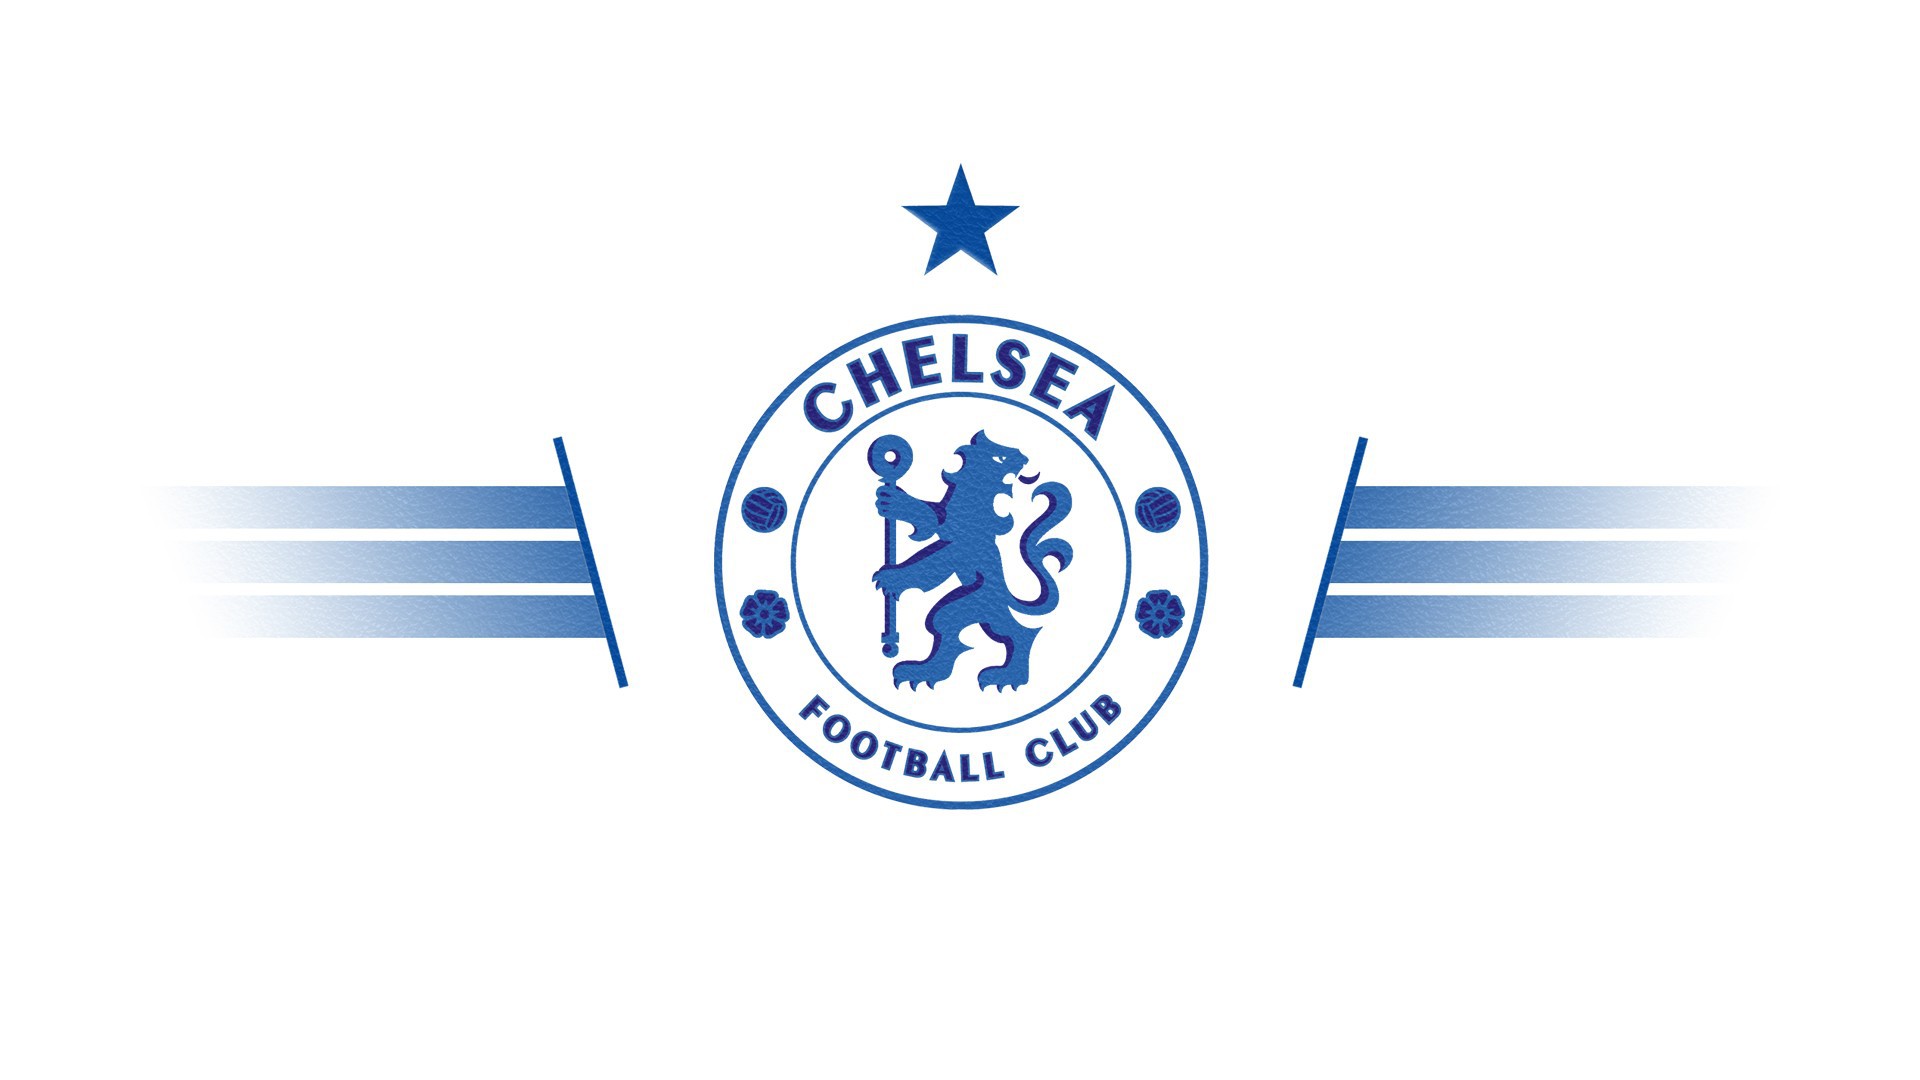 Zastaki.com - Футбольный клуб Челси, логотип  голубой на белом